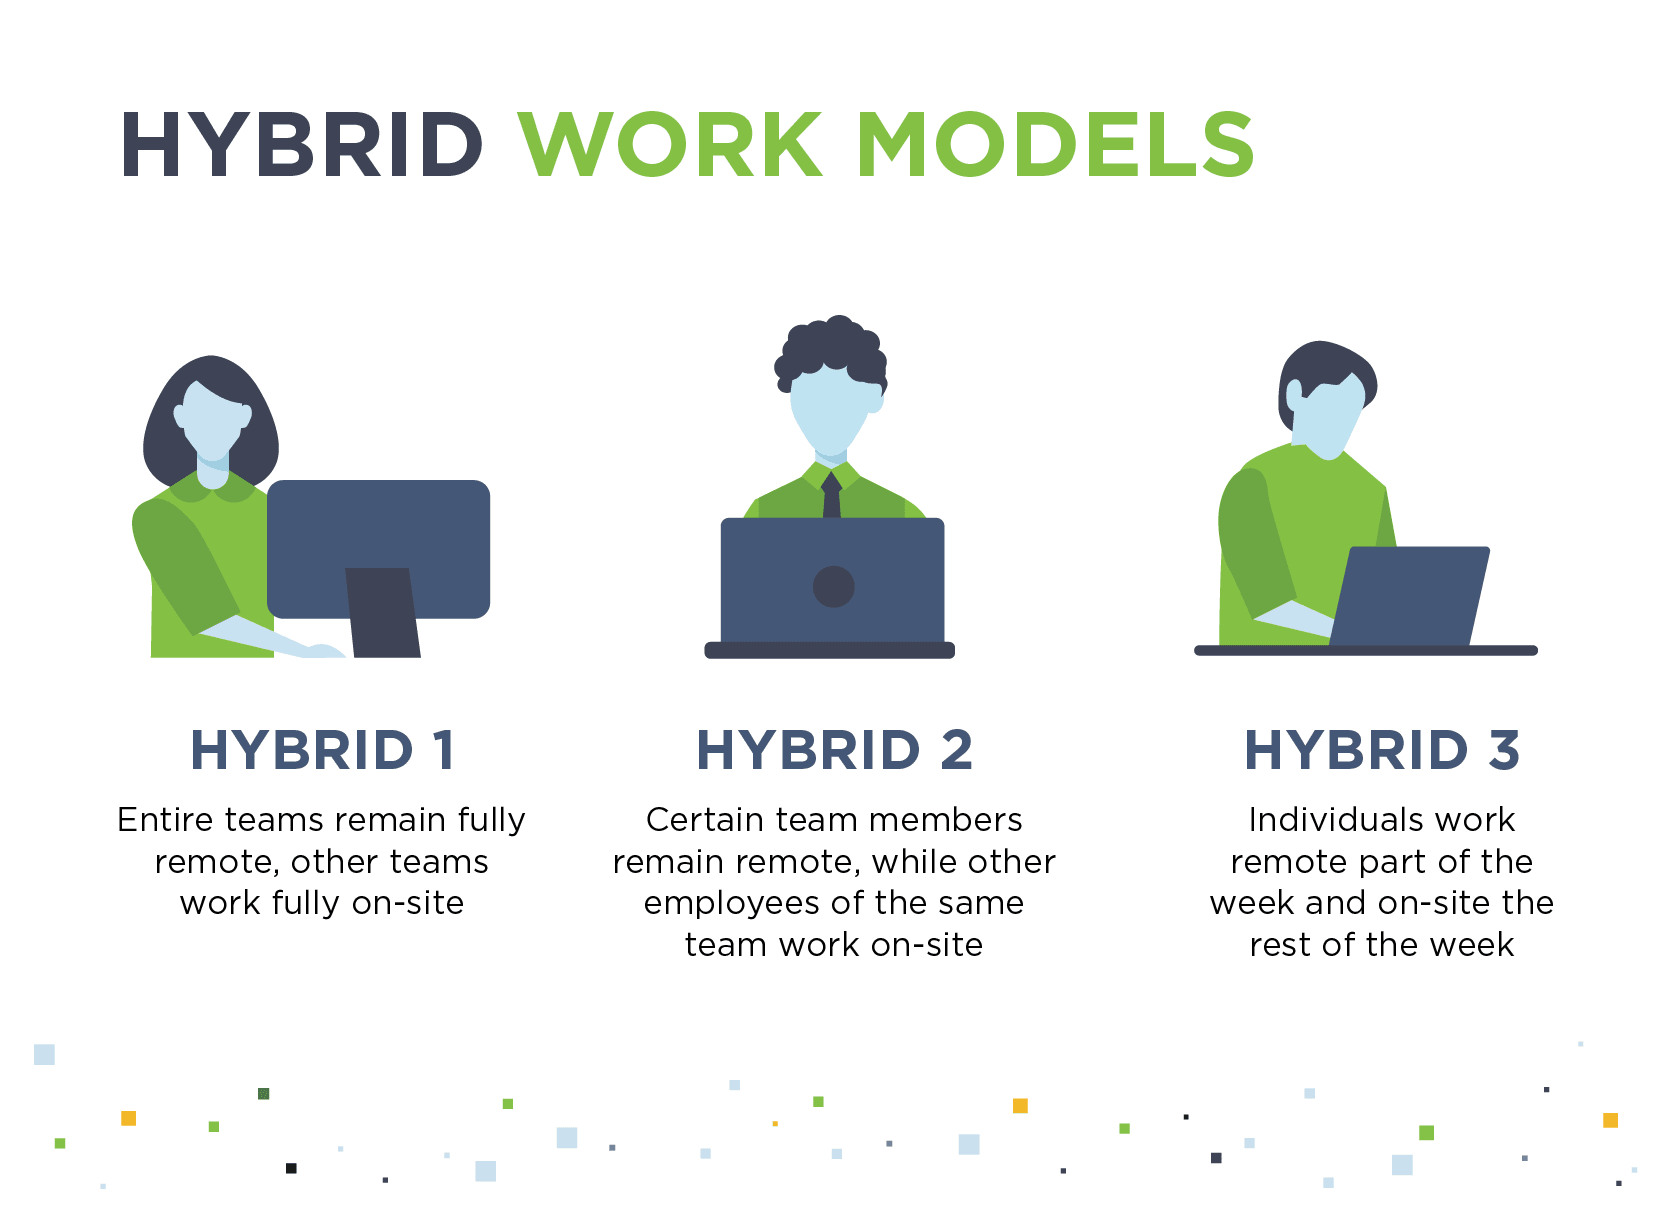 Illustration showing three different hybrid work models.